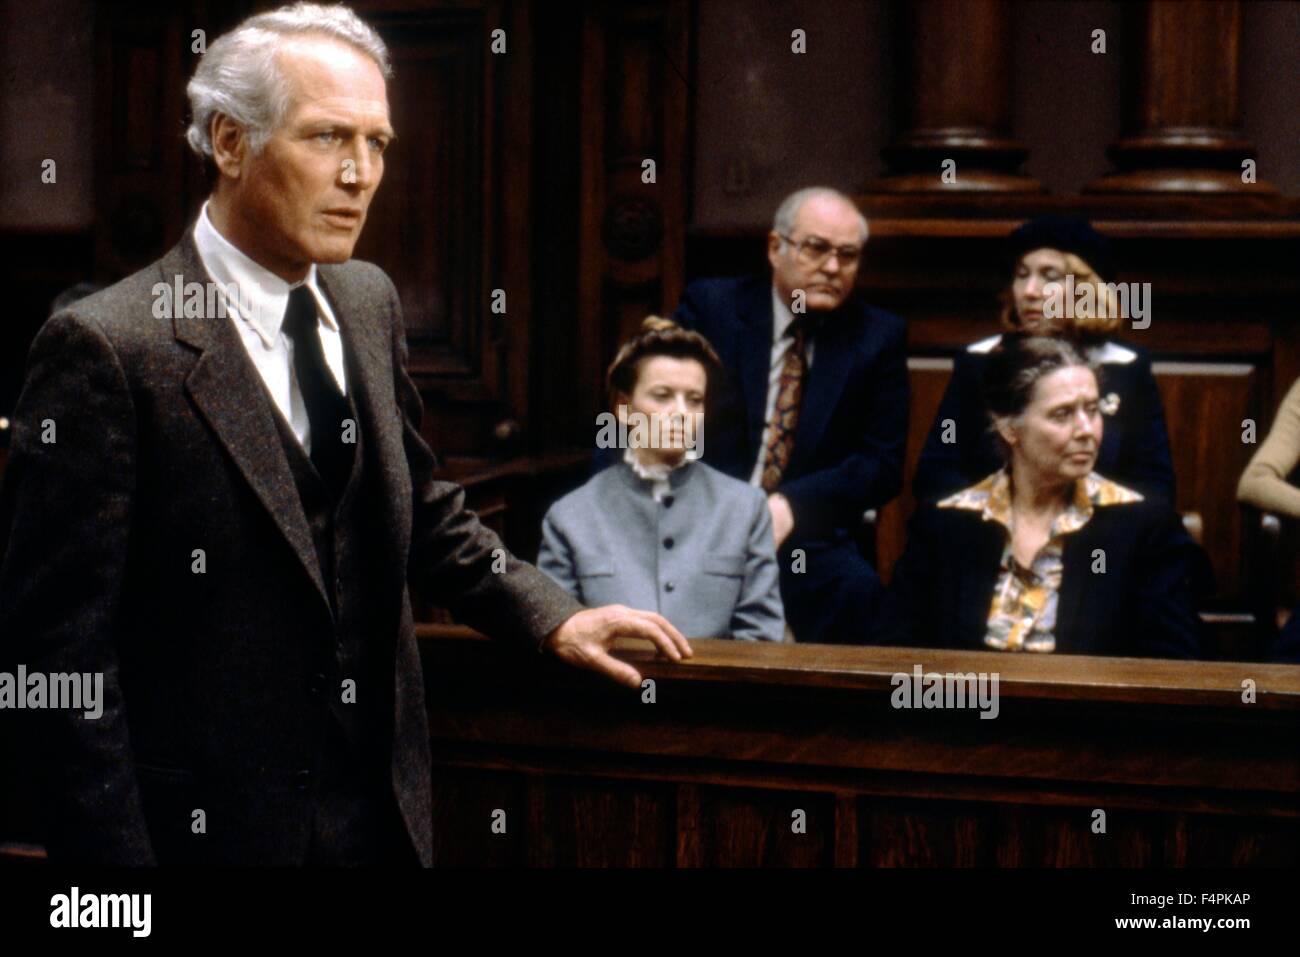 Paul Newman / The Verdict /1982 directed by Sidney Lumet [Twentieth Century Fox Film Corpr] Stock Photo